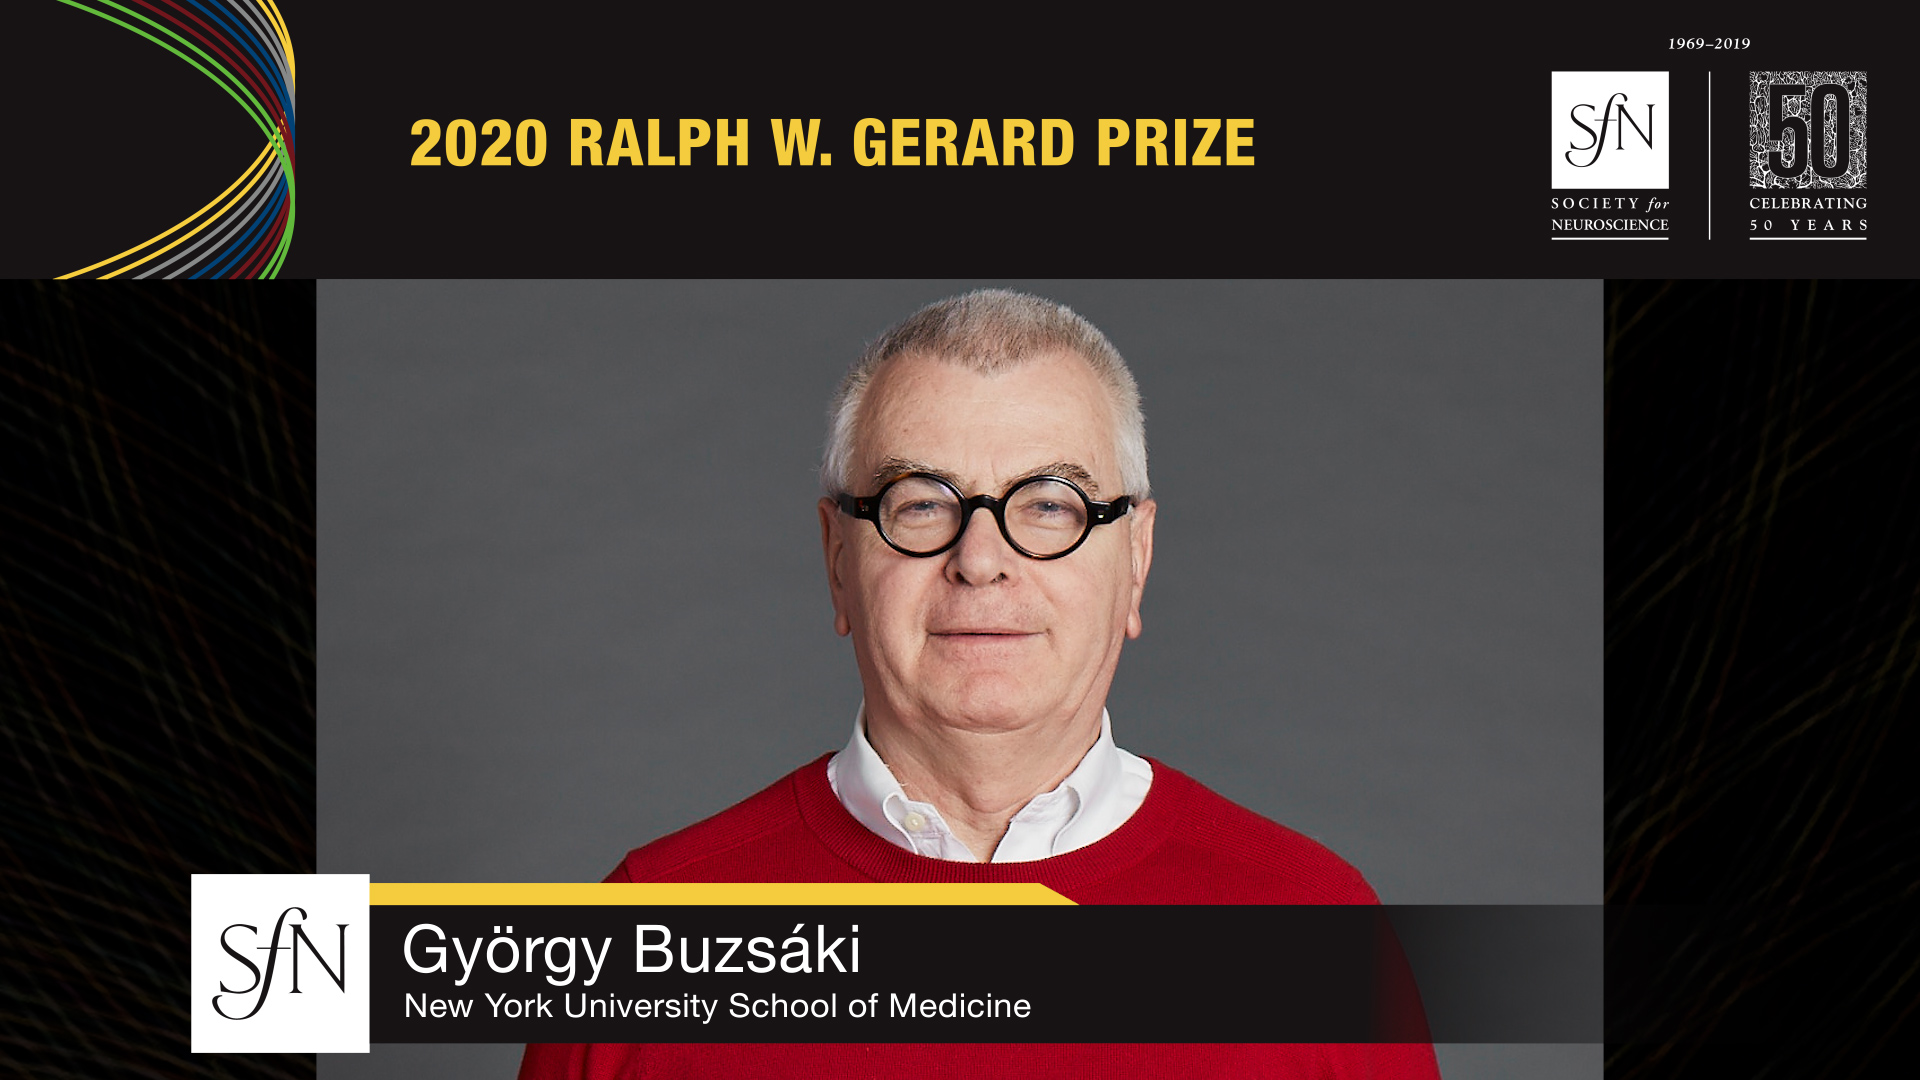 2020 Ralph W. Gerard award winner graphic, image of Gyorgy Buzsaki New York University School of Medicine